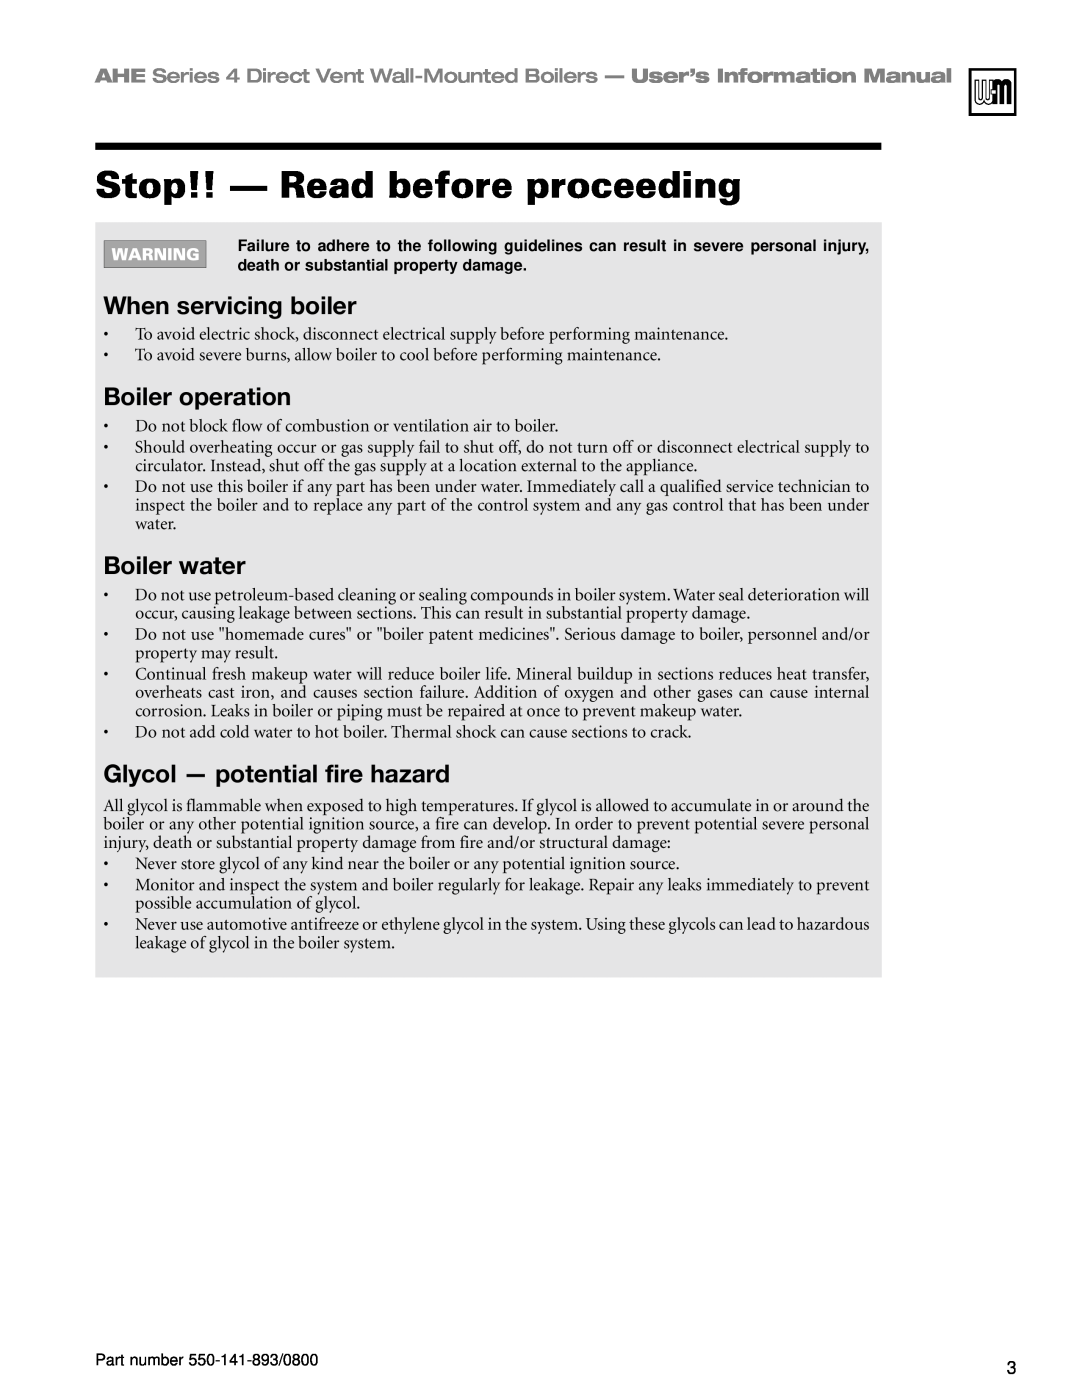 Honeywell Series 4 manual Stop!! - Read before proceeding, When servicing boiler, Boiler operation, Boiler water 